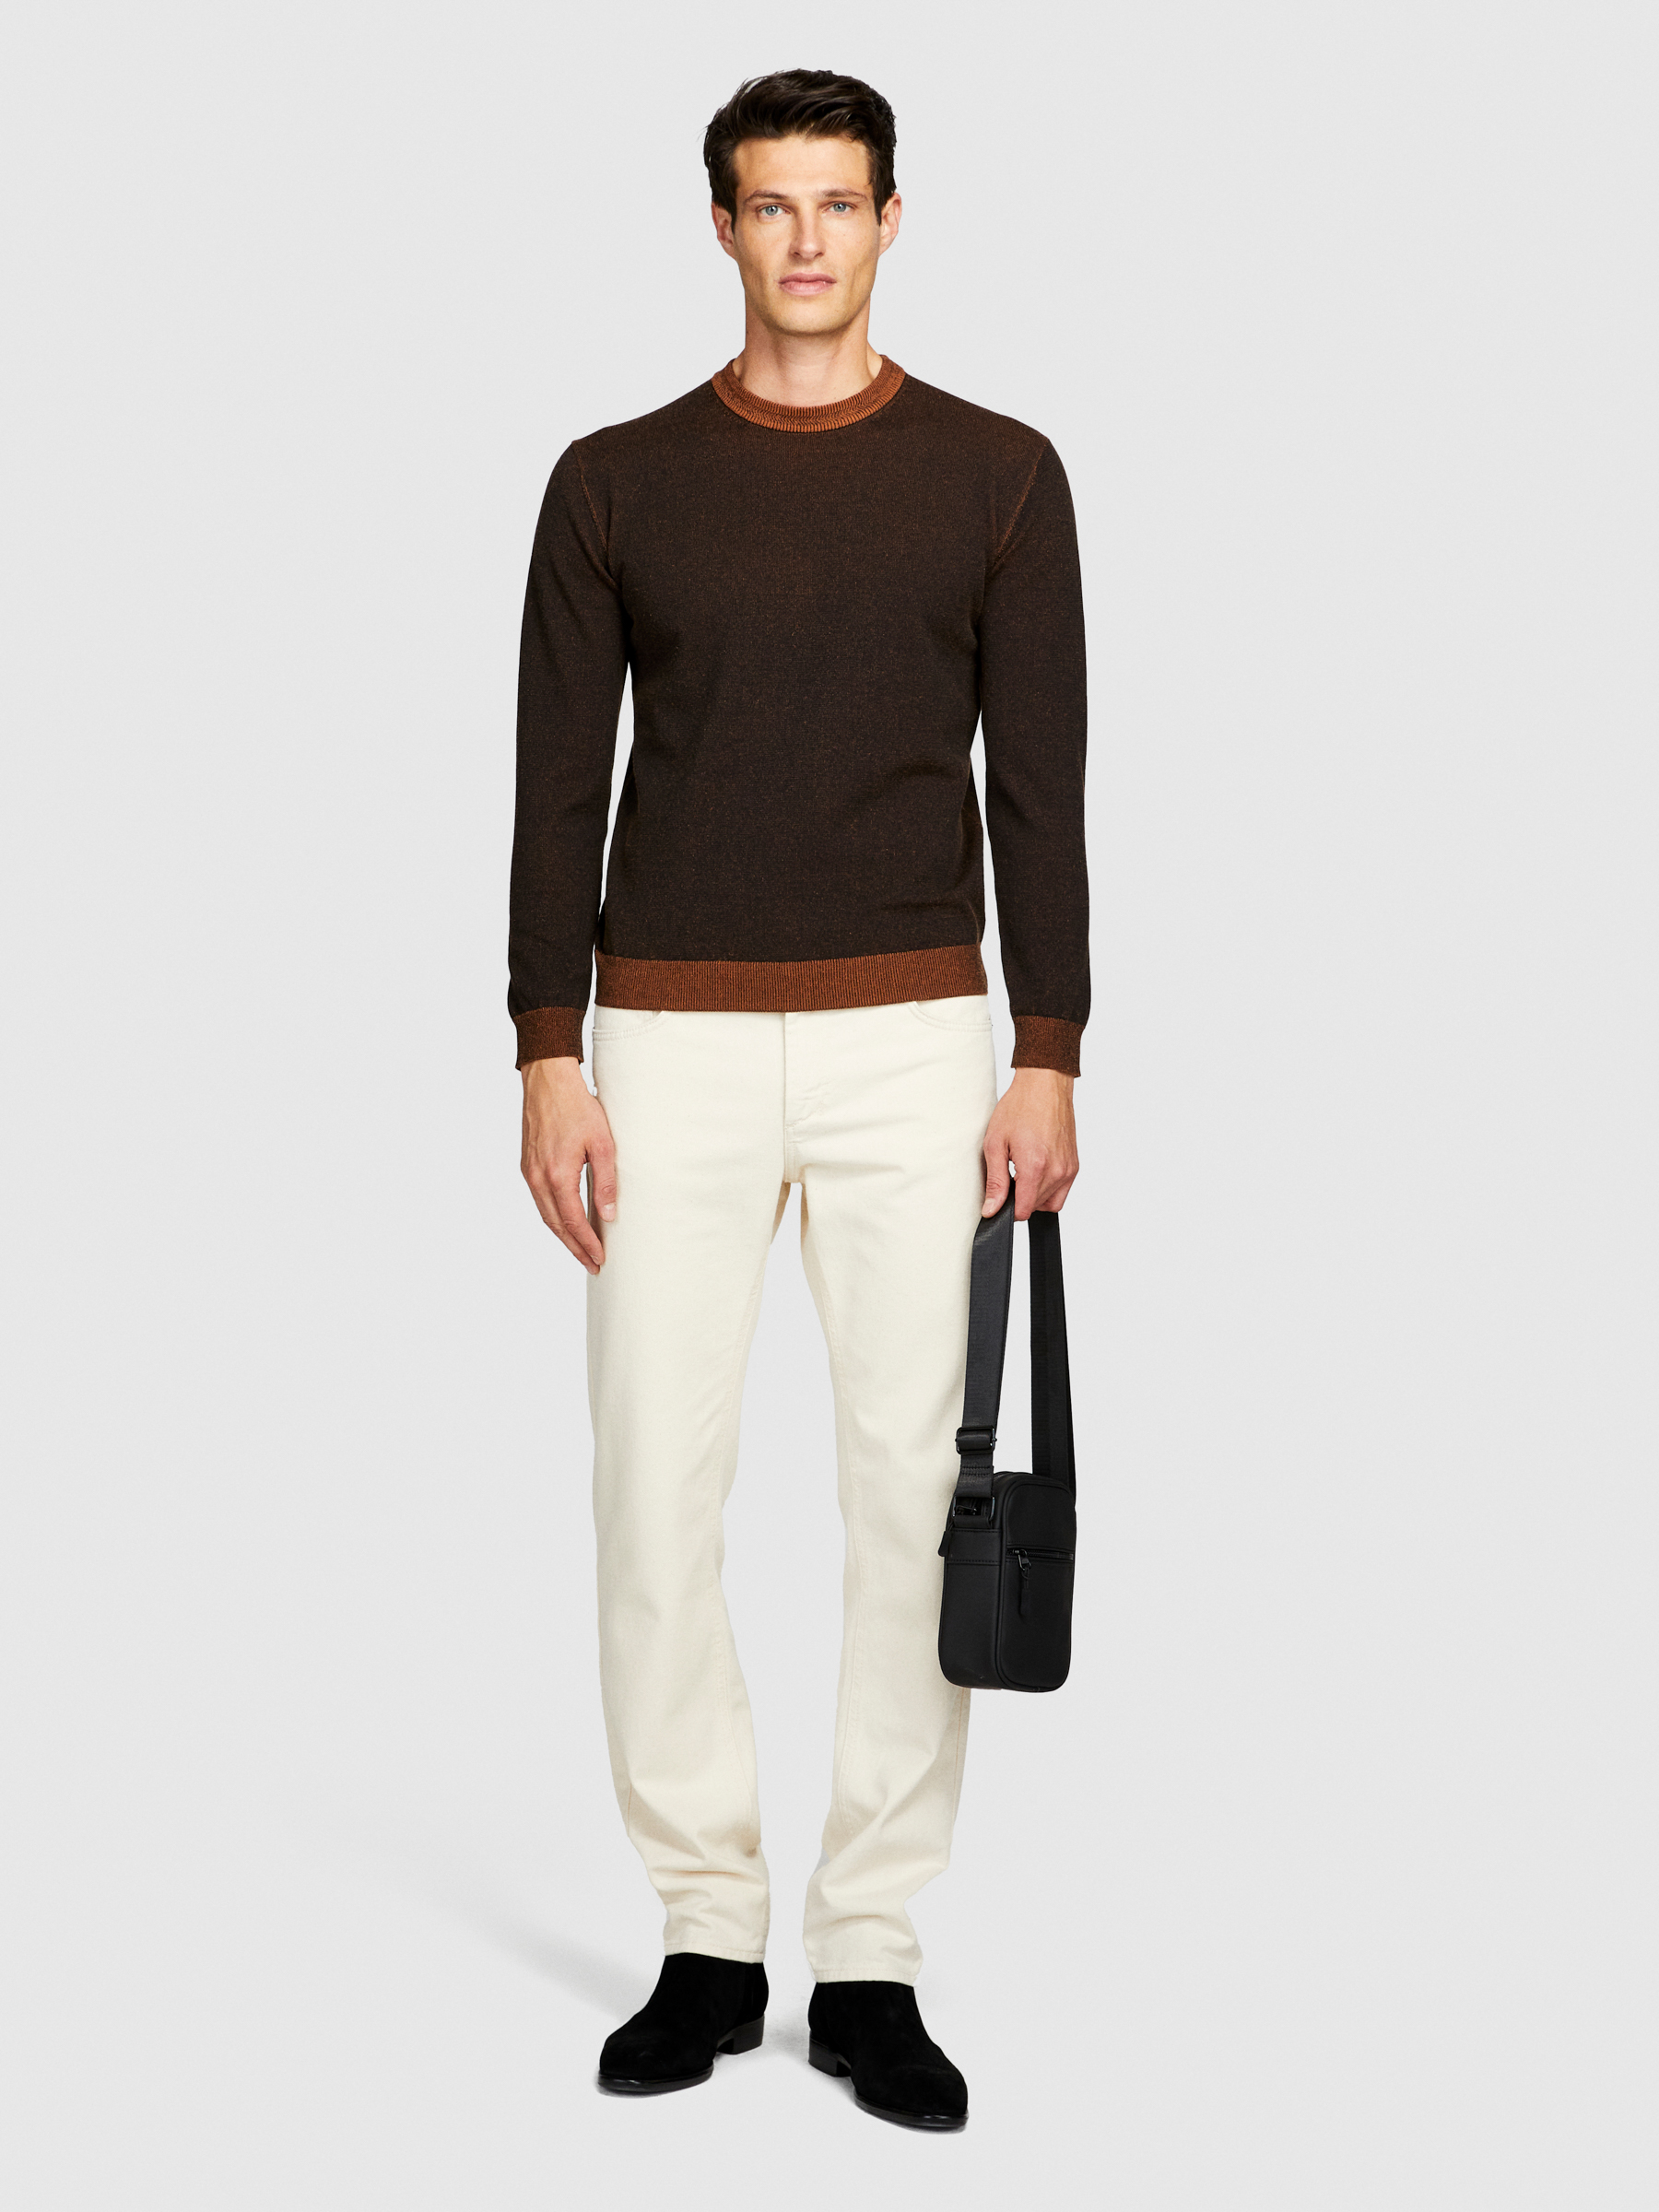 Sisley - Vanise Sweater, Man, Brown, Size: XL